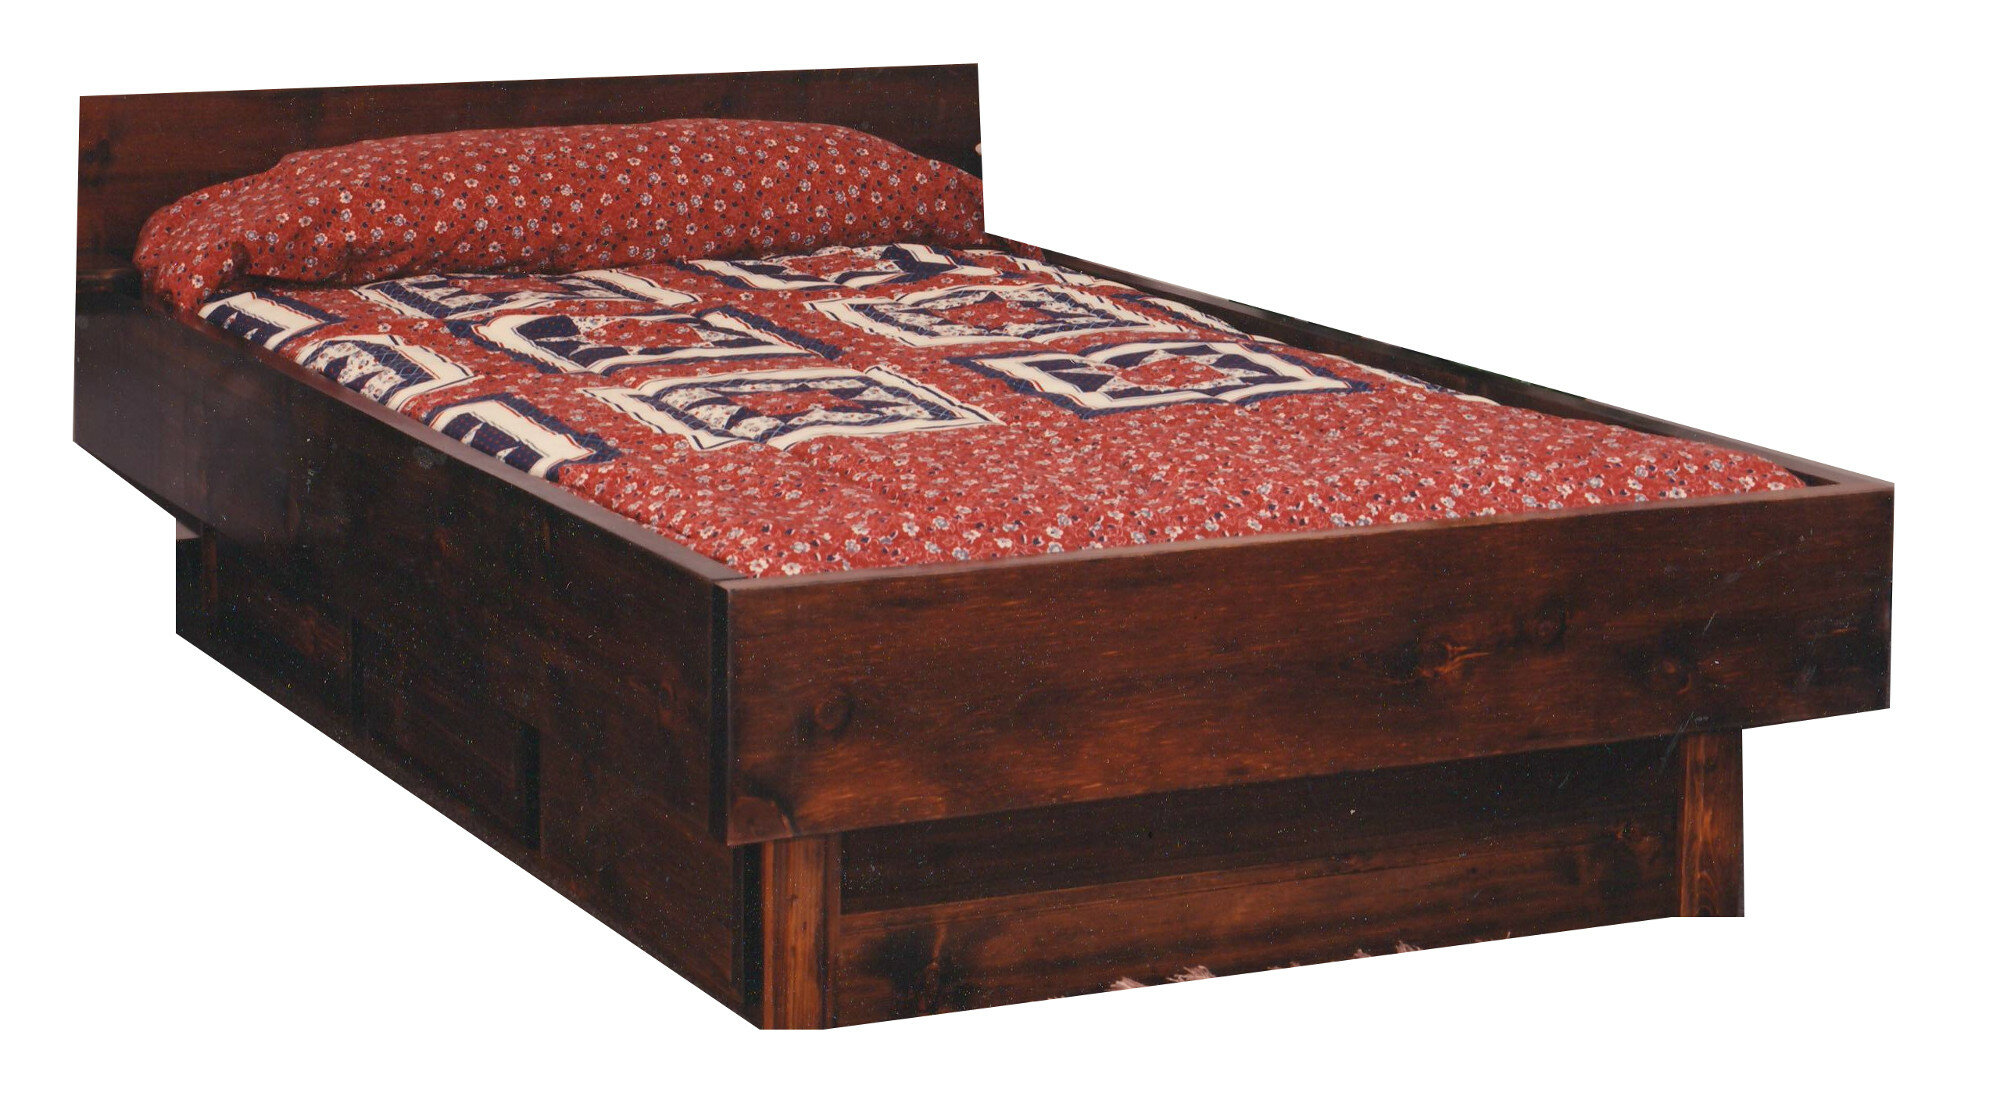 waterbed mattress for sale ireland